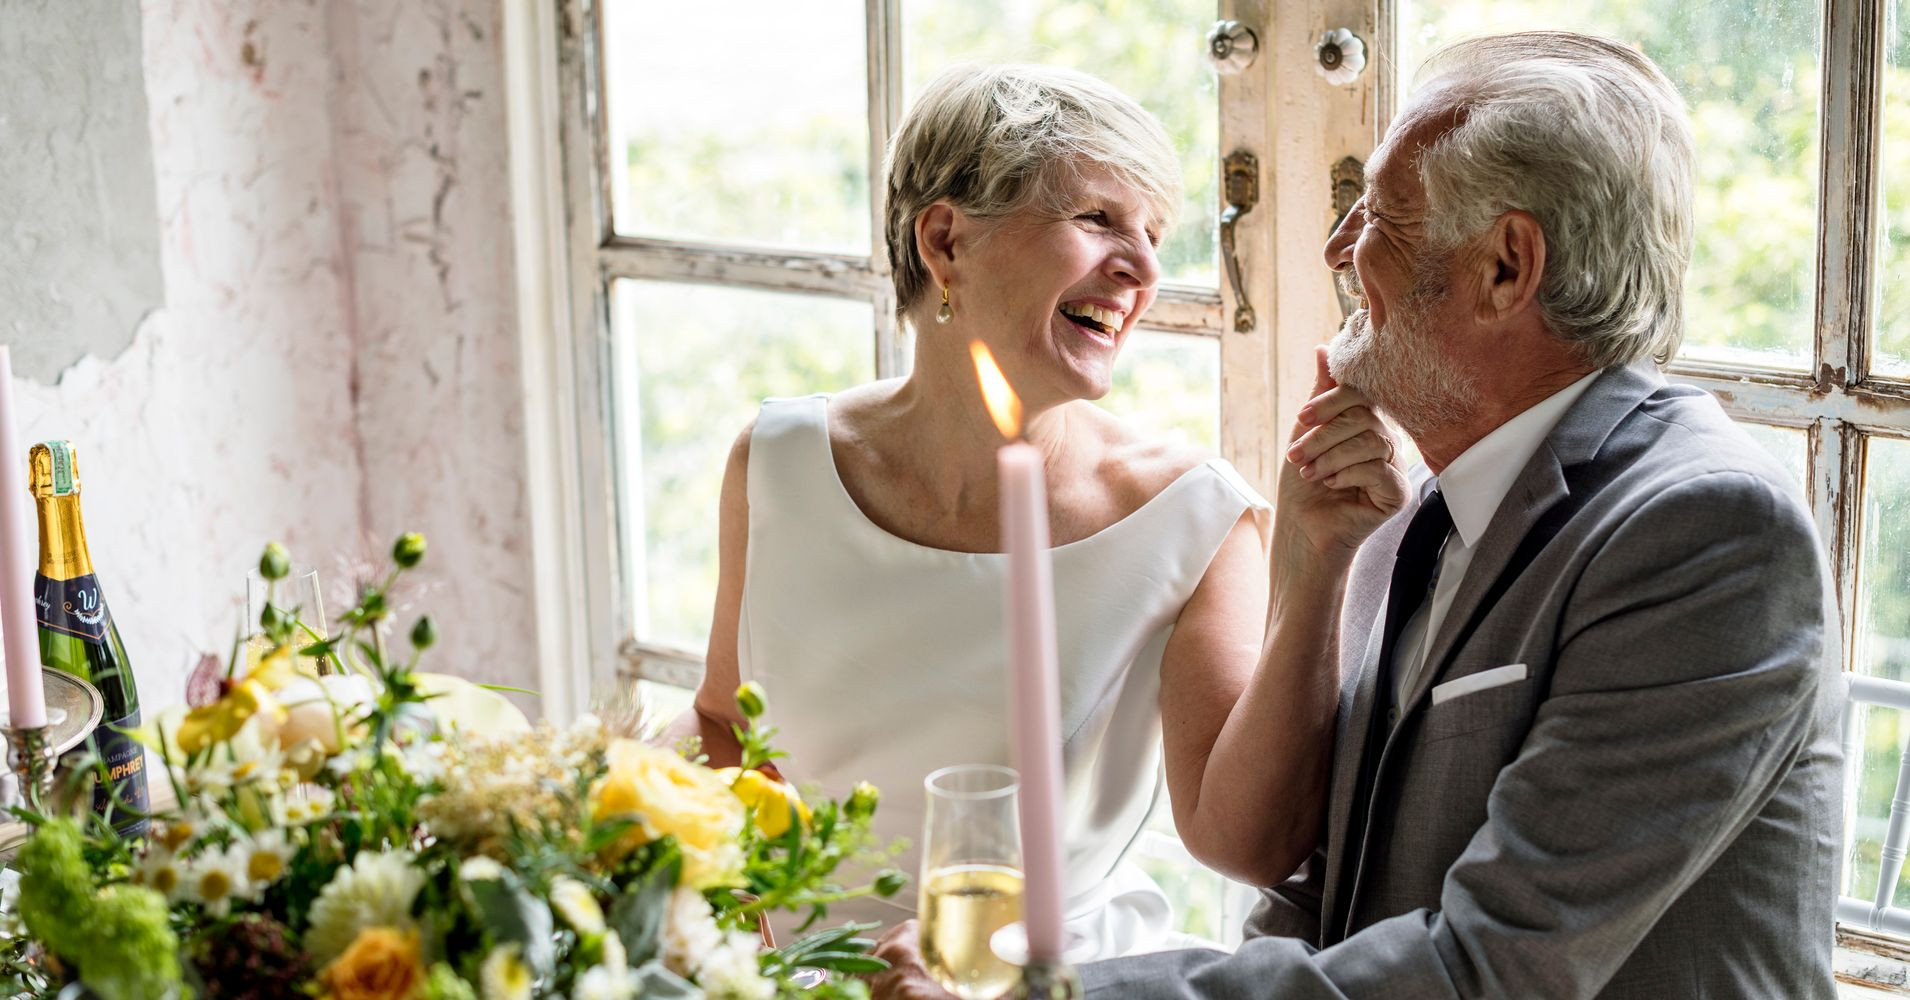 Wedding Gift Ideas For Older Couples
 27 Wedding Gifts For Older Couples Marrying The Second